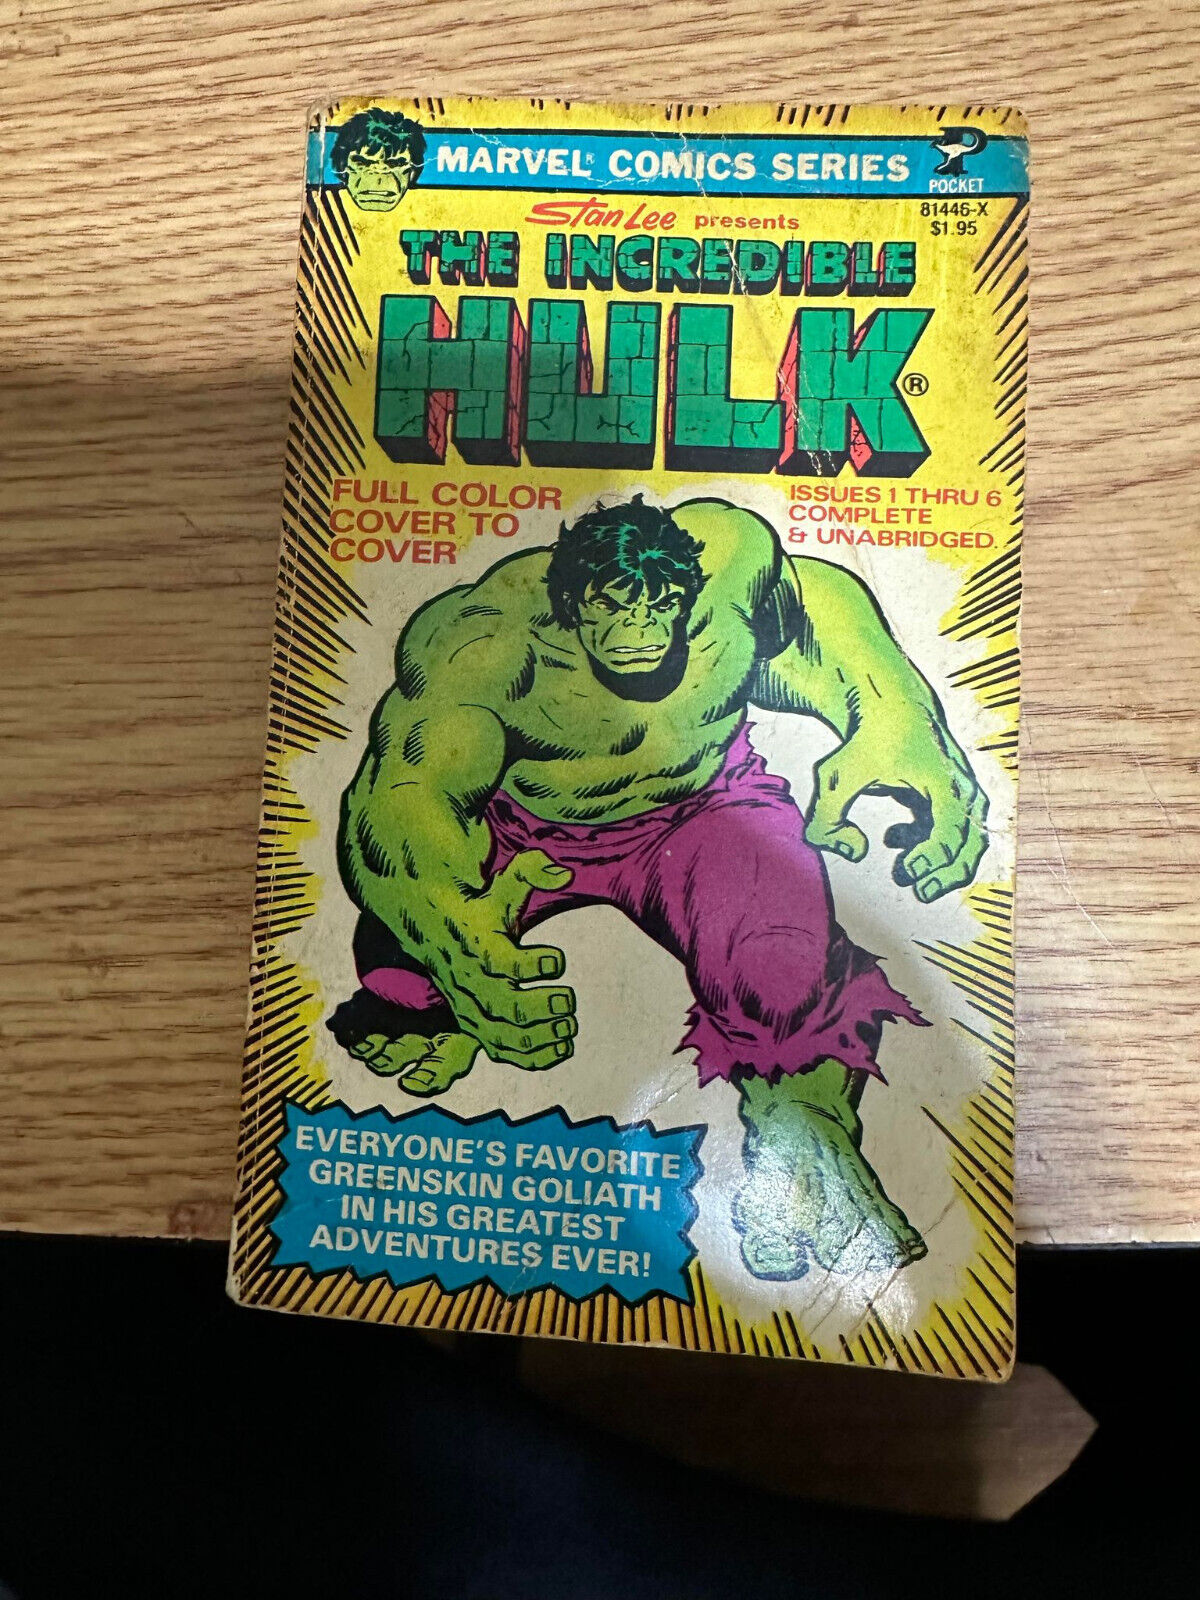 The Incredible Hulk #1 (81446-X) (Pocket Books April 1978)